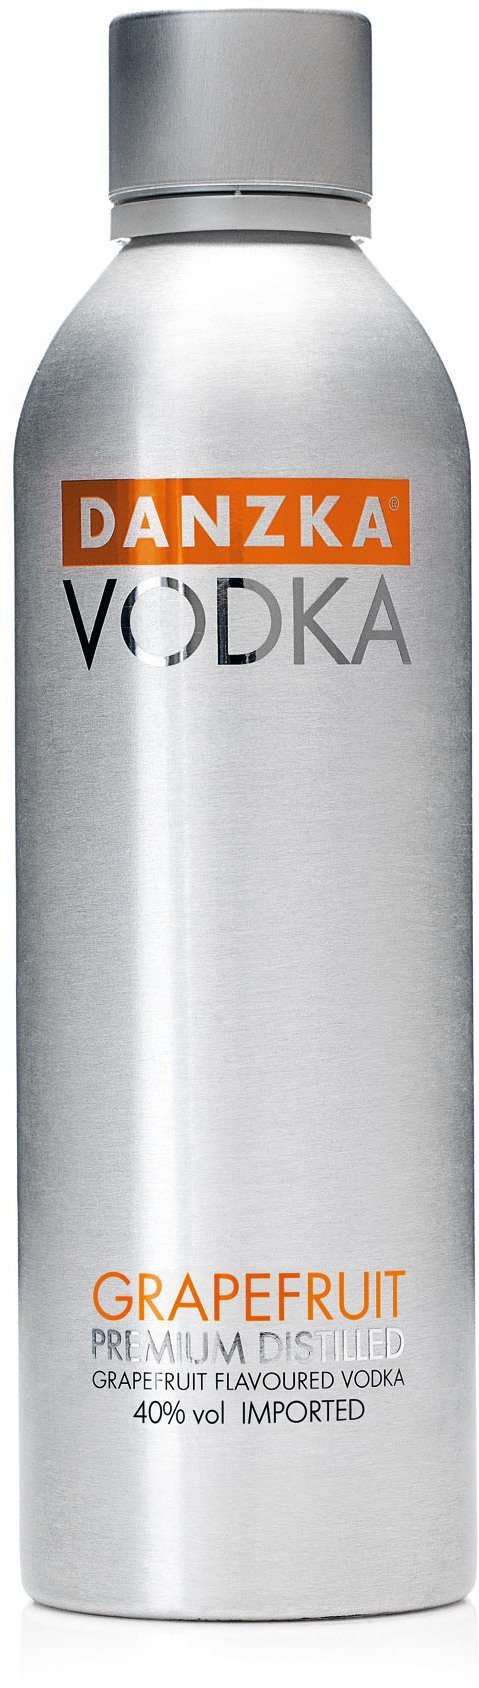 duty-free 1L Grapefruit Vodka in Premium Porubne DANZKA – bordershop at